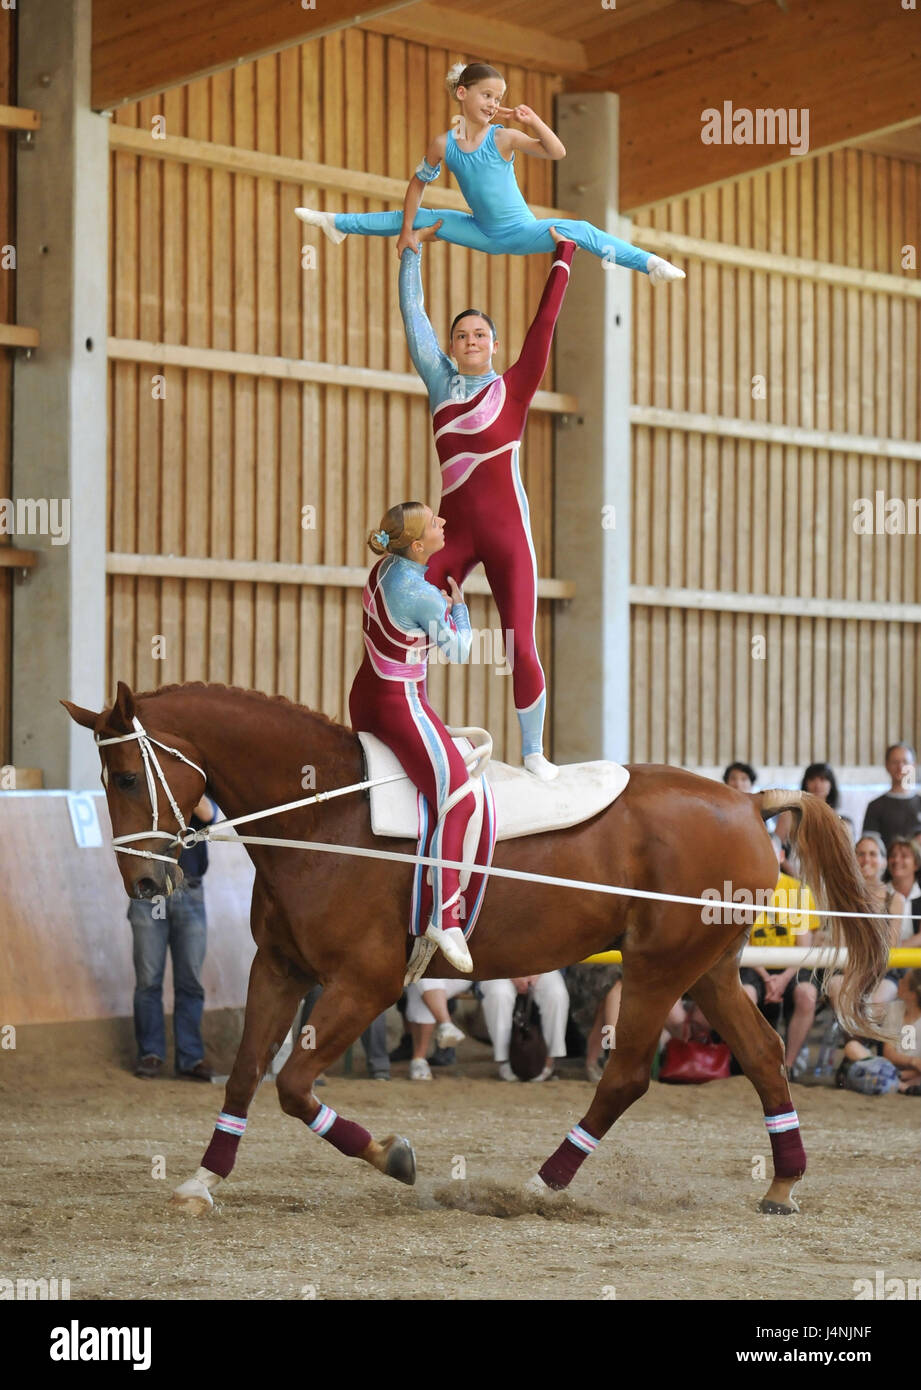 Riding hall, girl, horse, Voltigieren, acrobatics, no model release Stock  Photo - Alamy